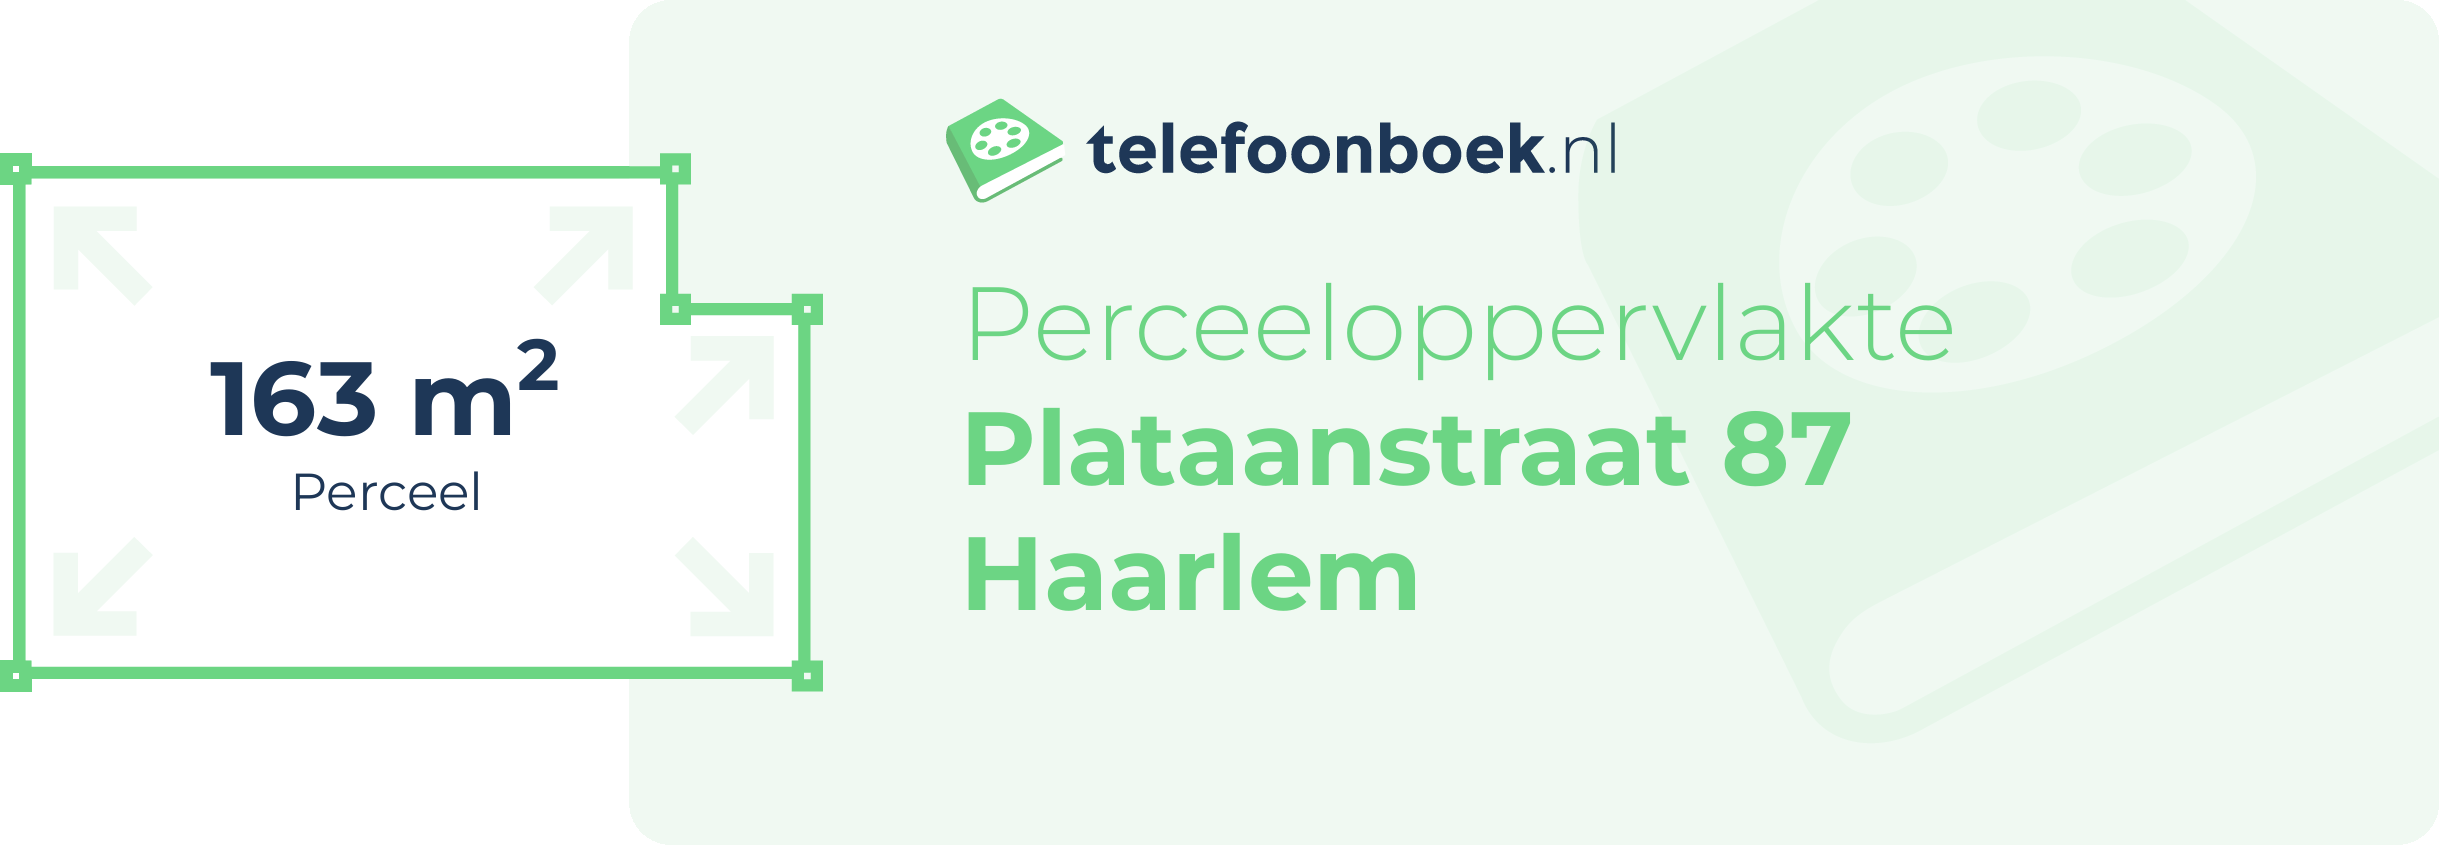 Perceeloppervlakte Plataanstraat 87 Haarlem